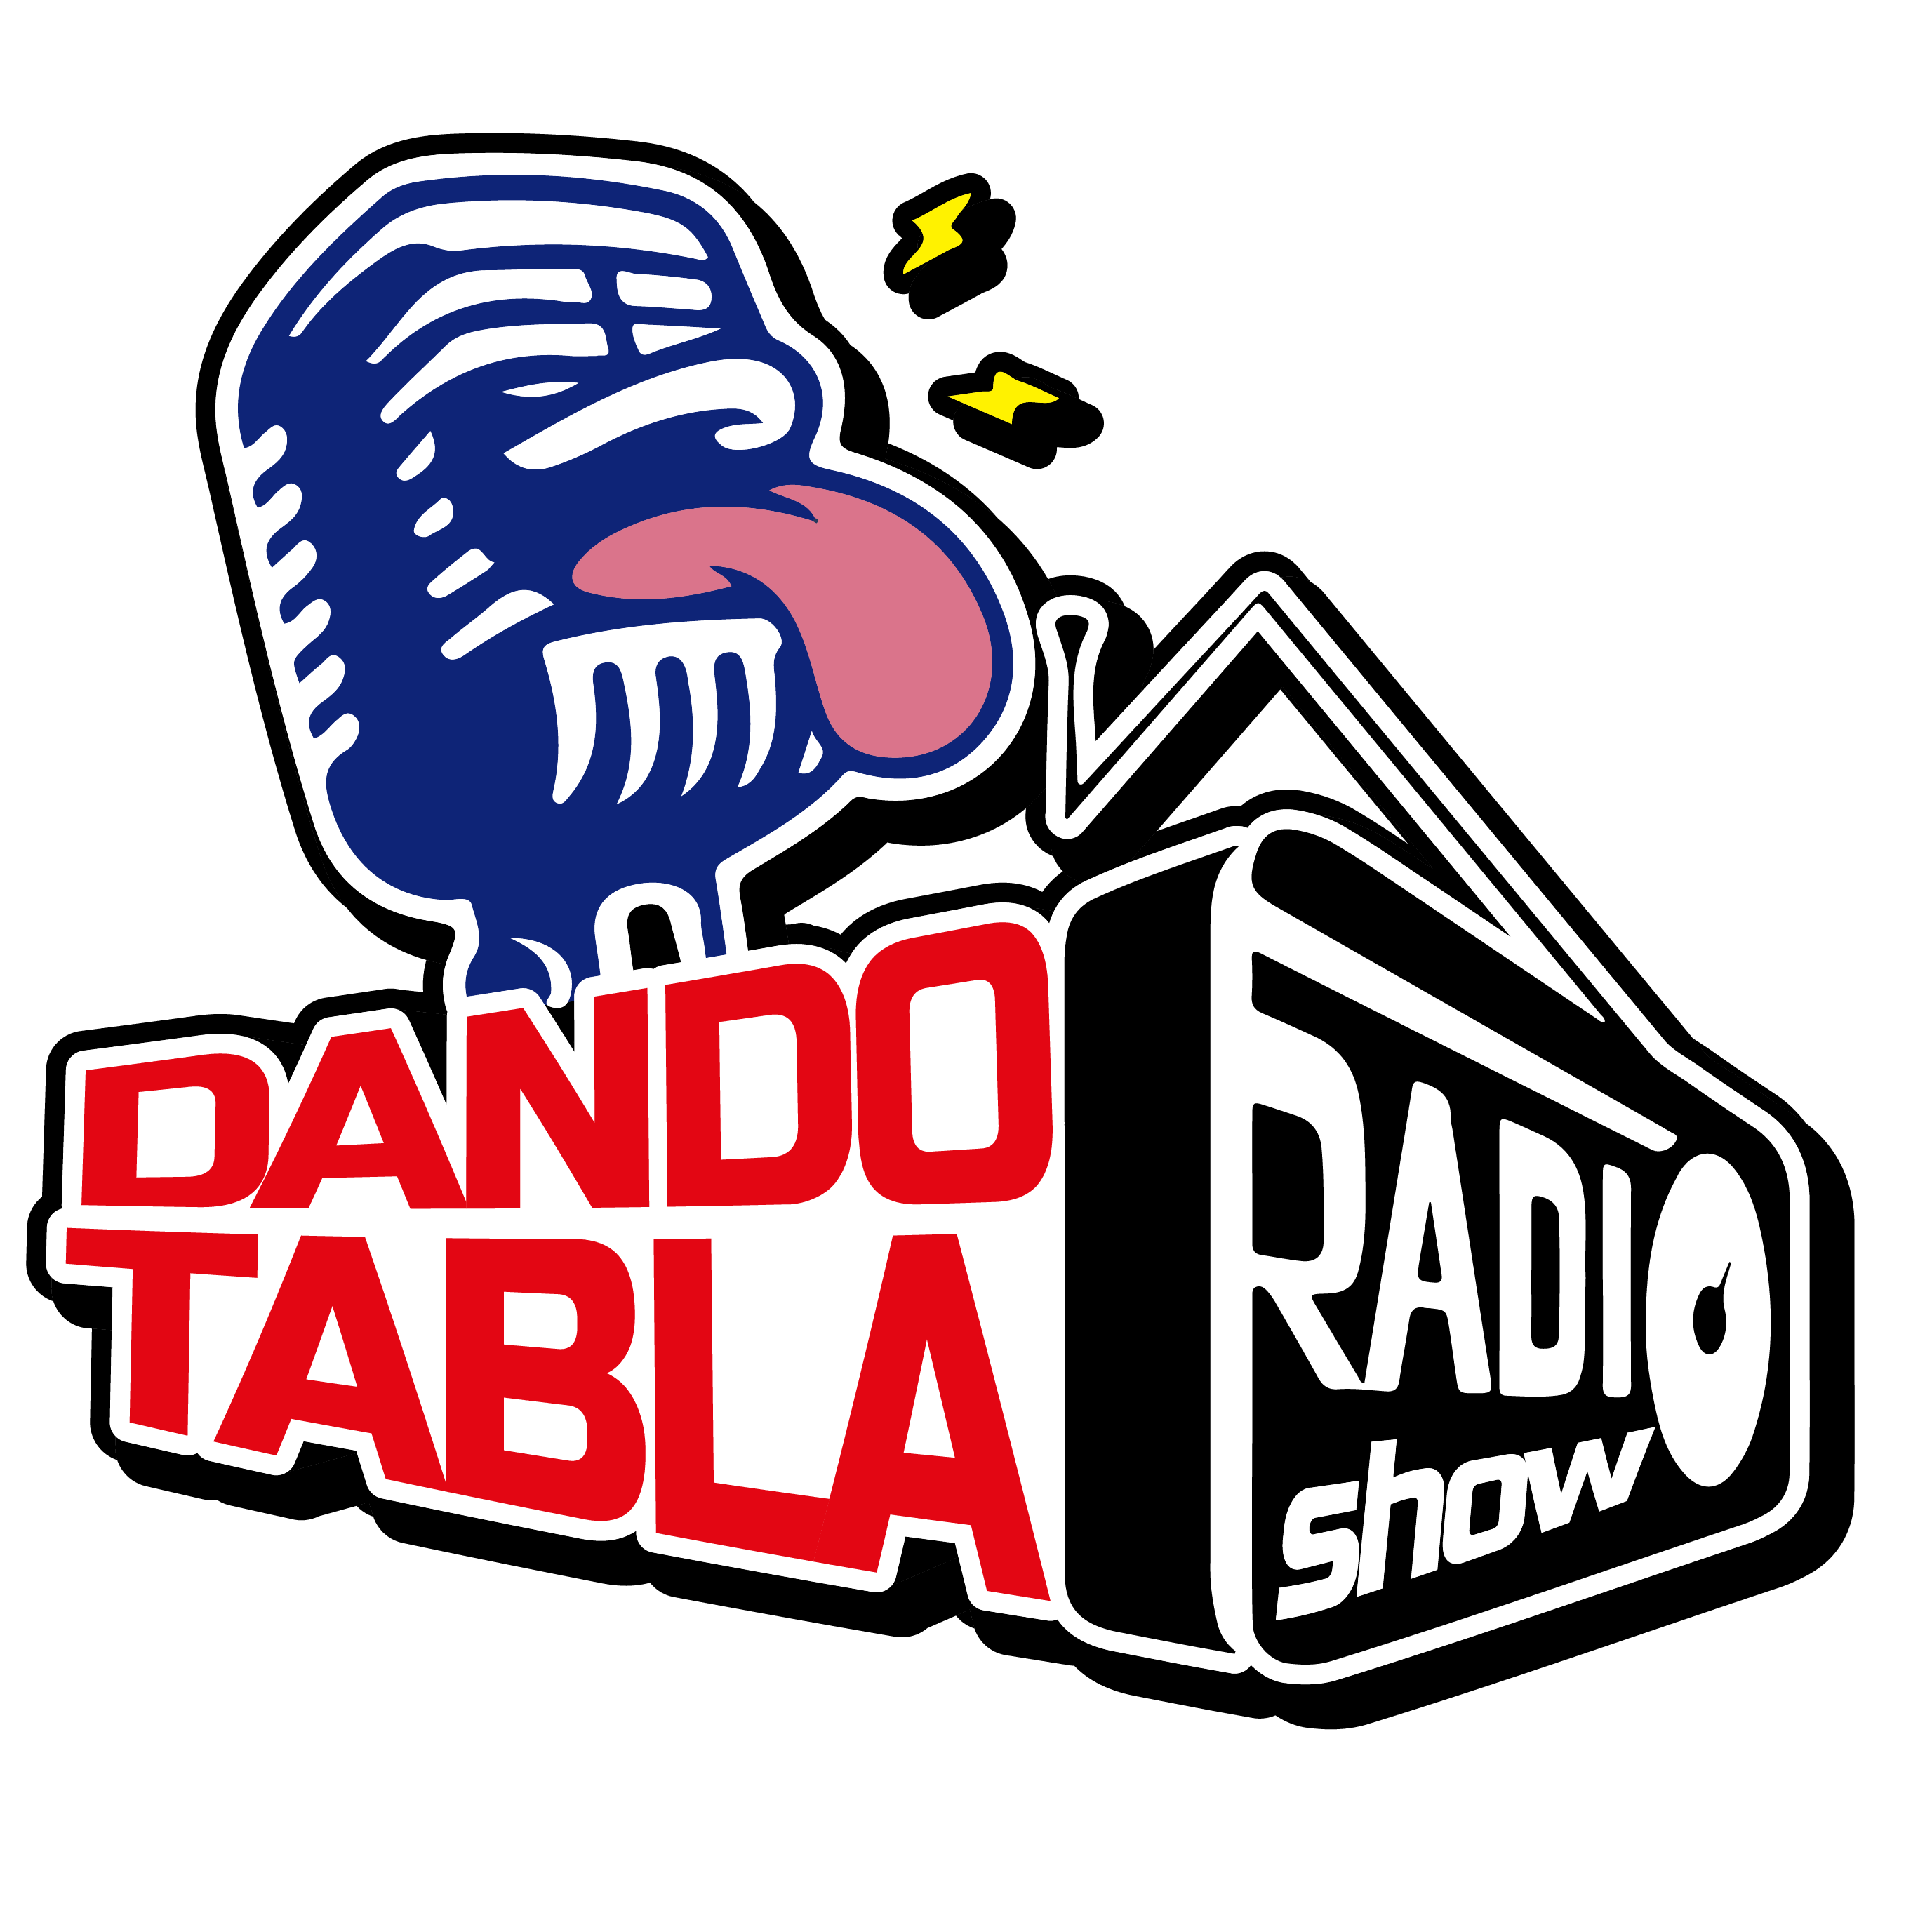 Dando Tabla Radio Show